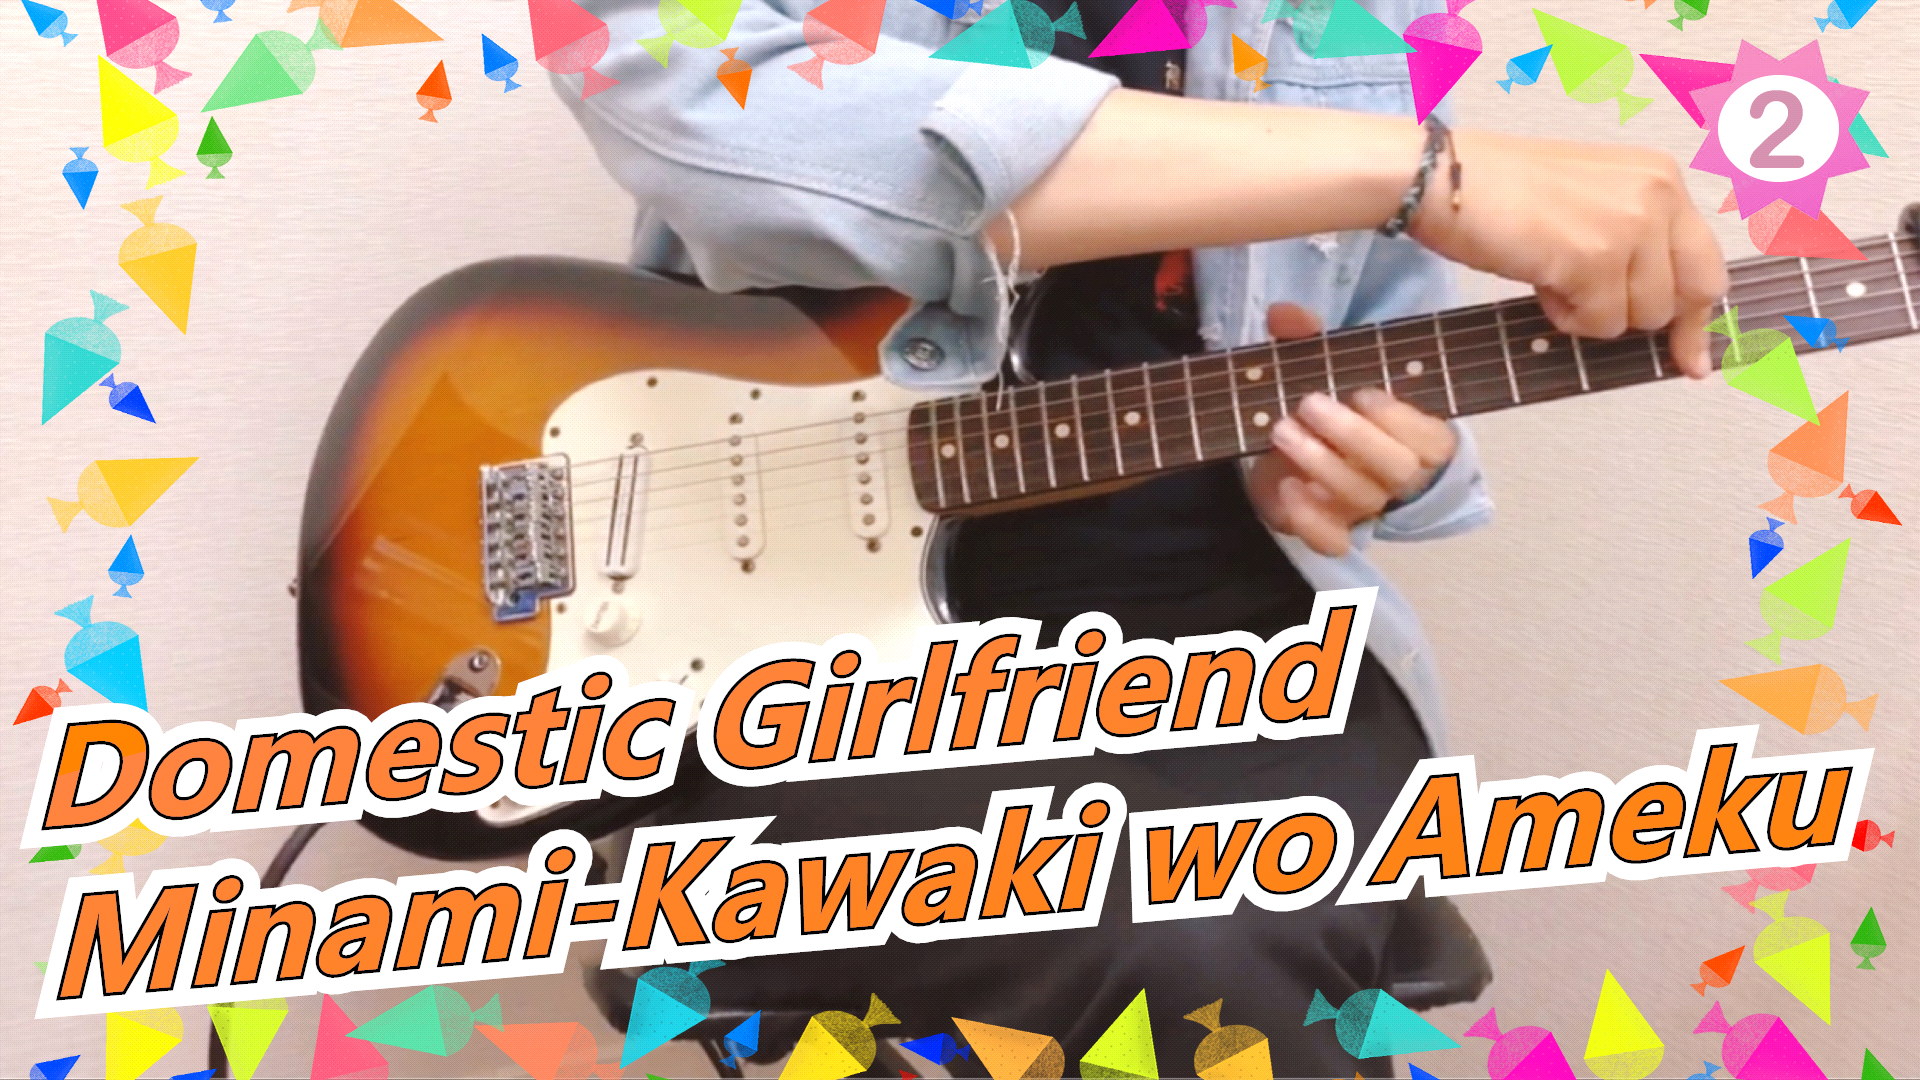 Domestic Girlfriend (Abertura) - Kawaki wo Ameku by Minami